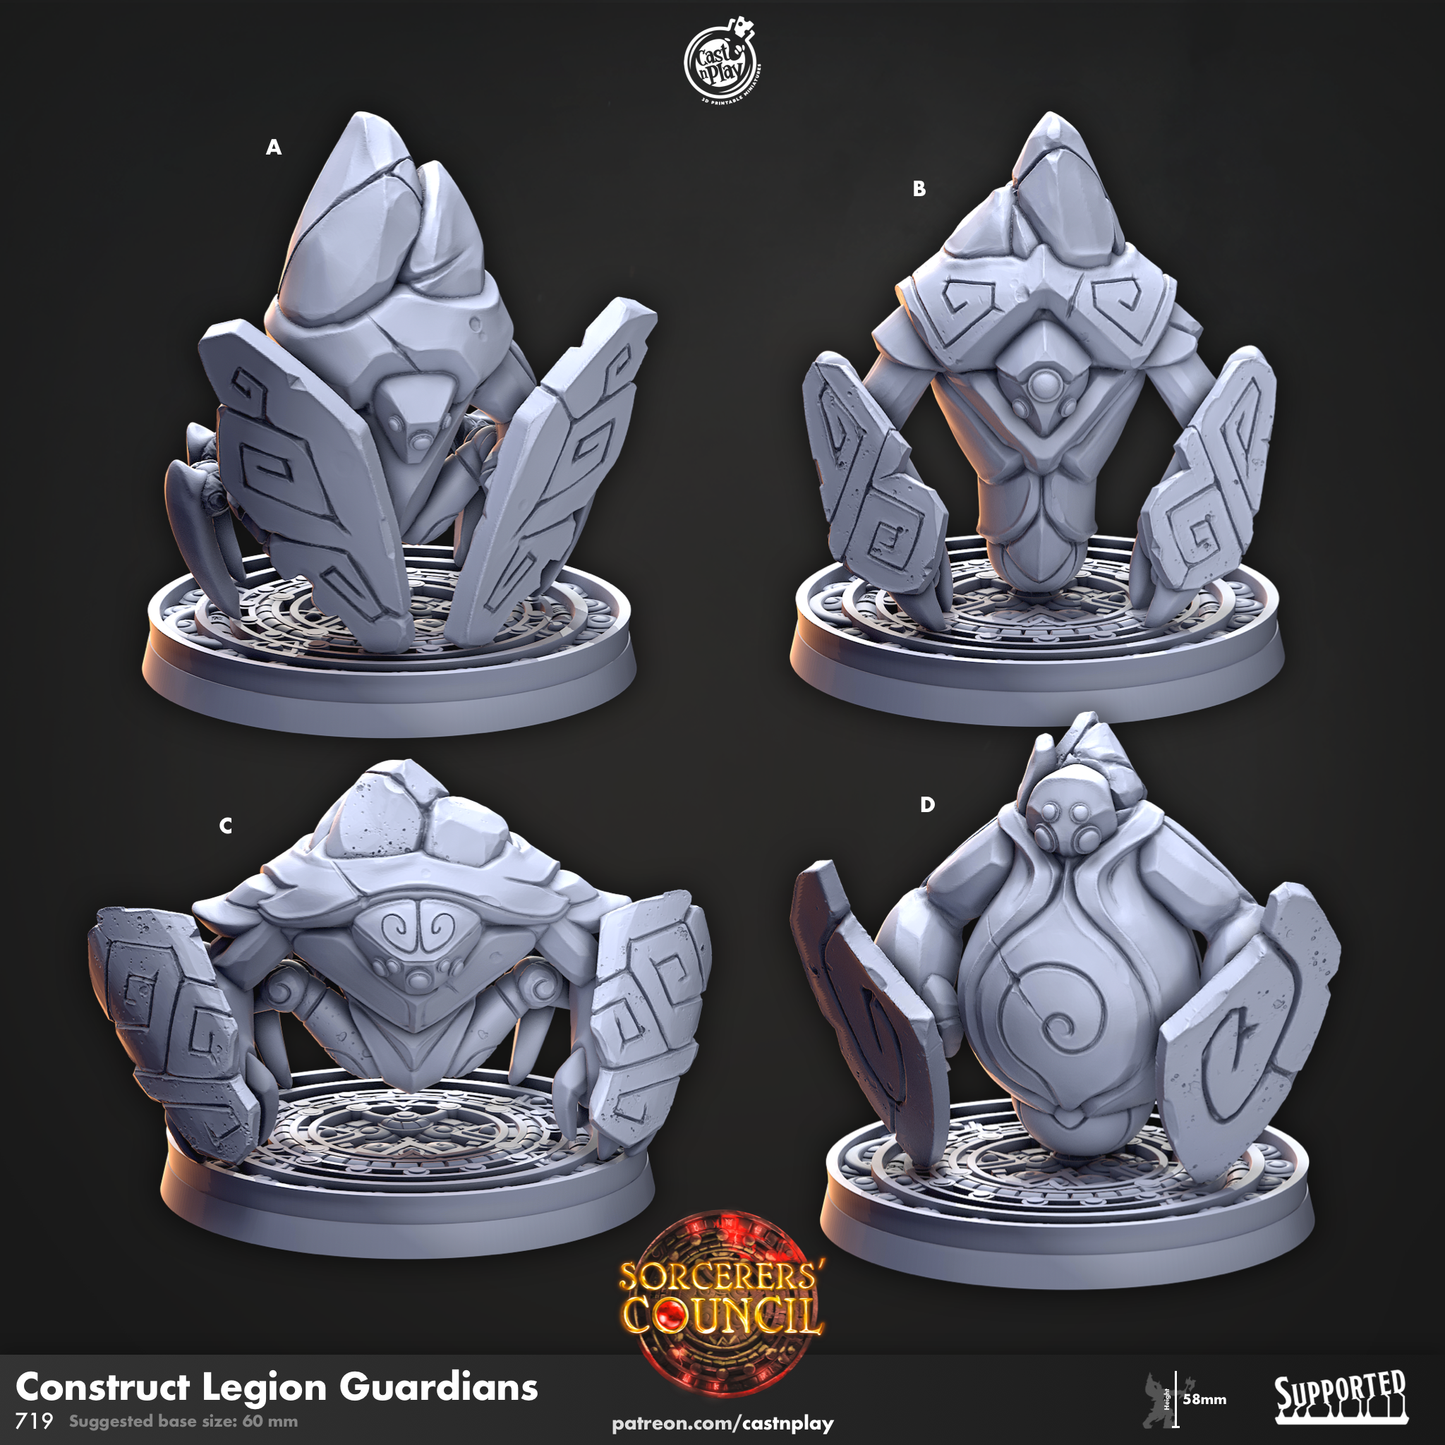 Construct Legion Guardians - Sorcerers Counceul